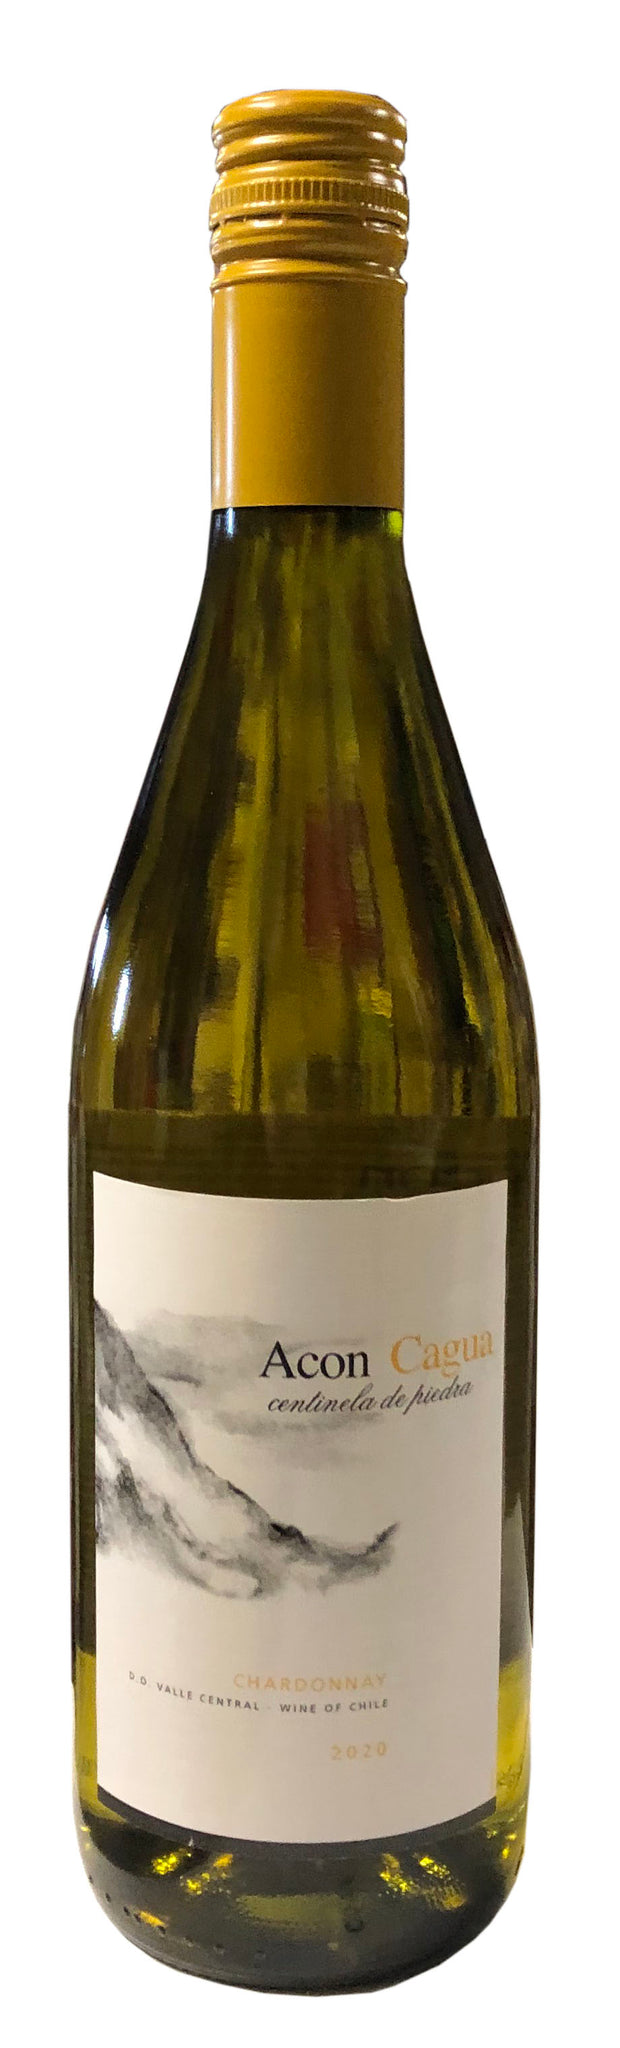 Acon Cagua Chardonnay